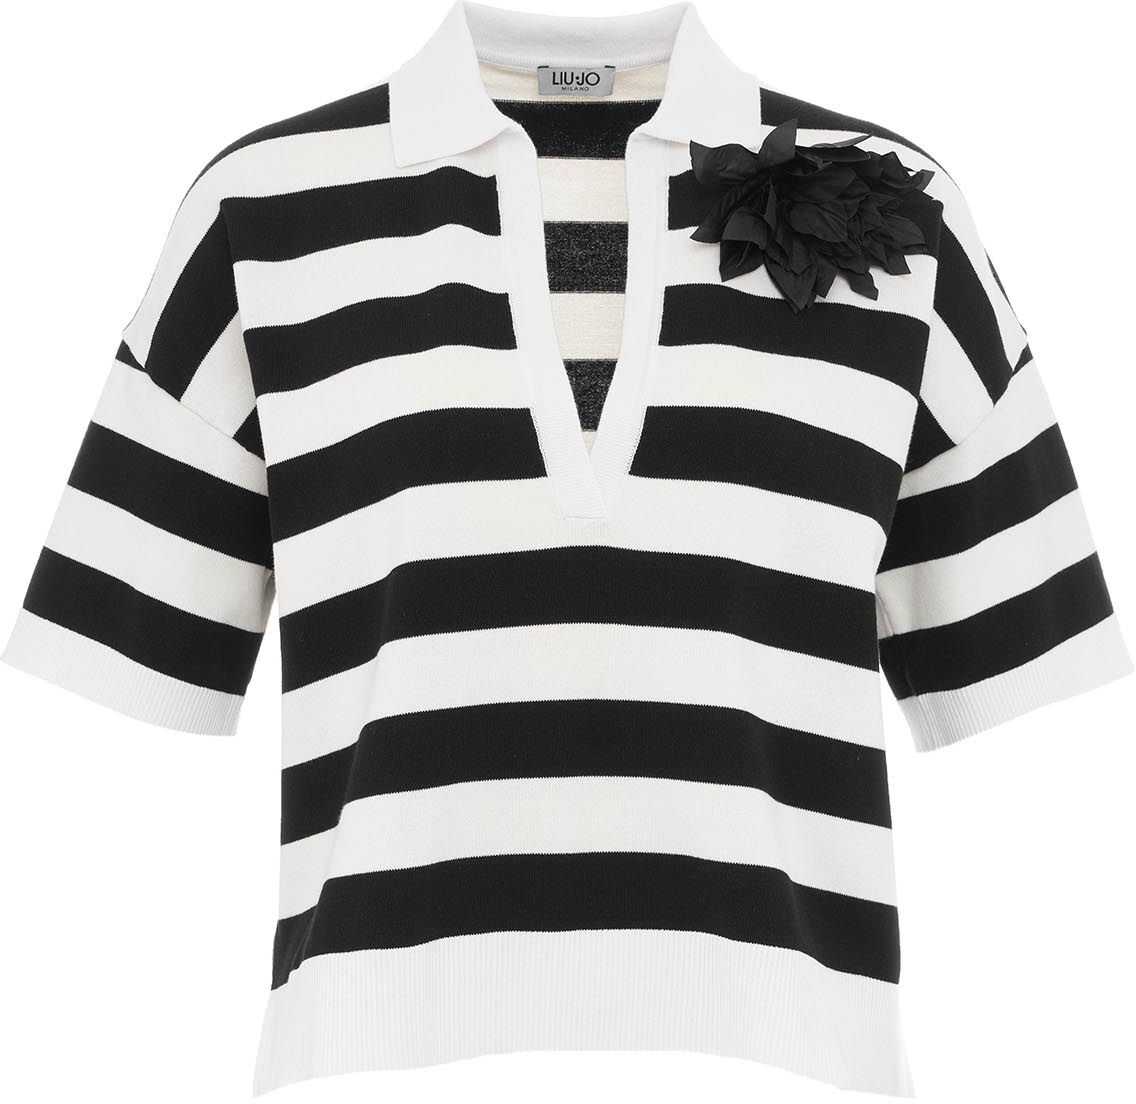 Liu Jo Polo sweater with stripes Black image